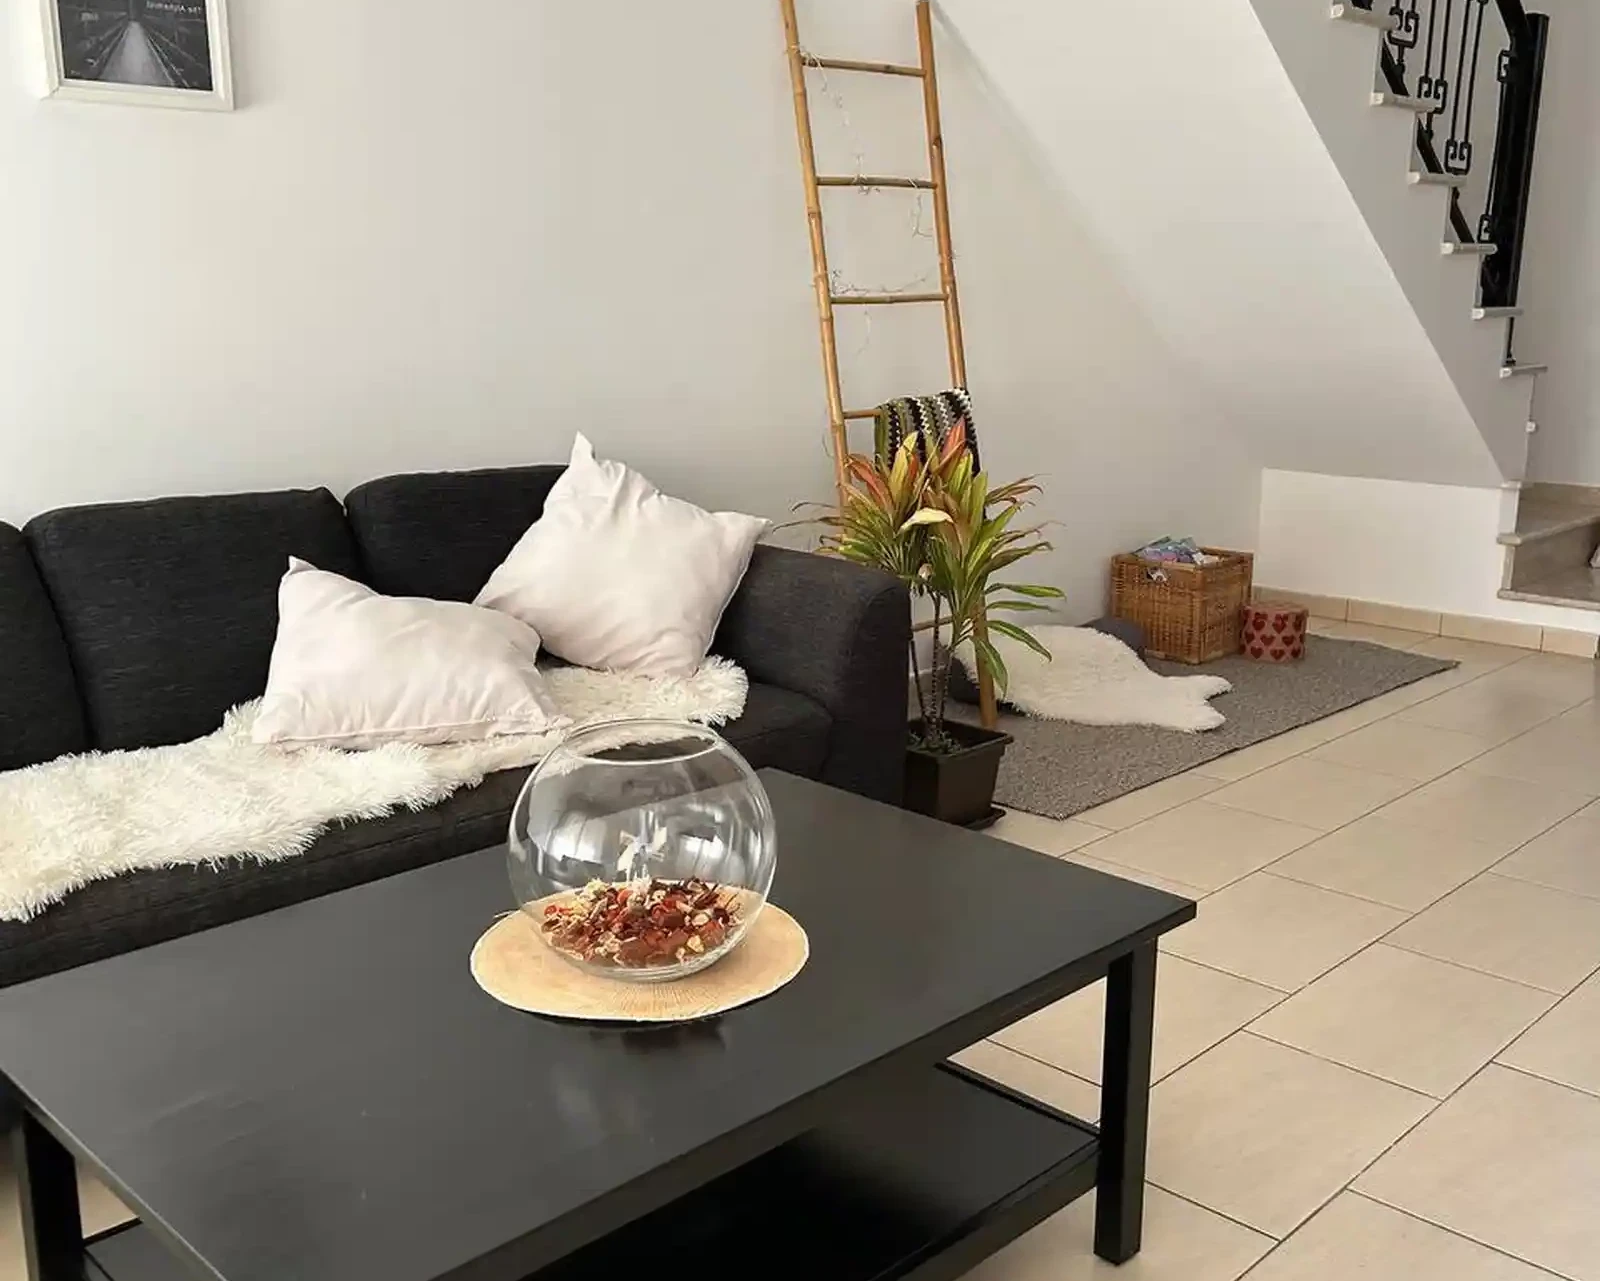 2-bedroom maisonette fоr sаle €290.000, image 1